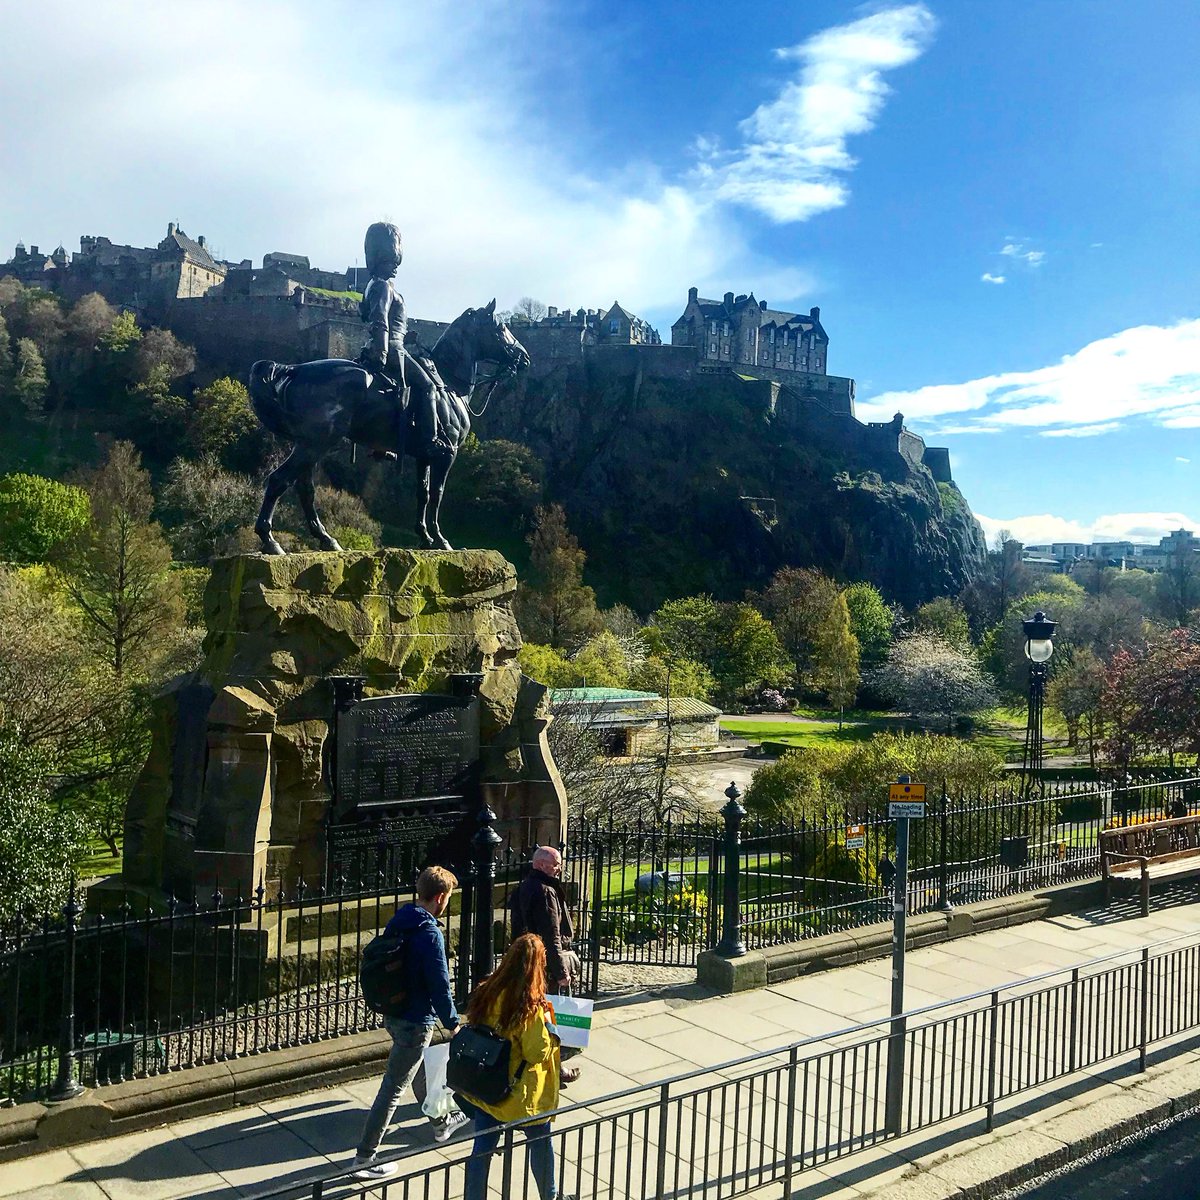 Don’t you love Edinburgh when the suns out. #home #edinburgh #edinburghcastle #busviews #hometime #princesstreet #blueskies #sunshine #scotland #visitscotland #busjouney